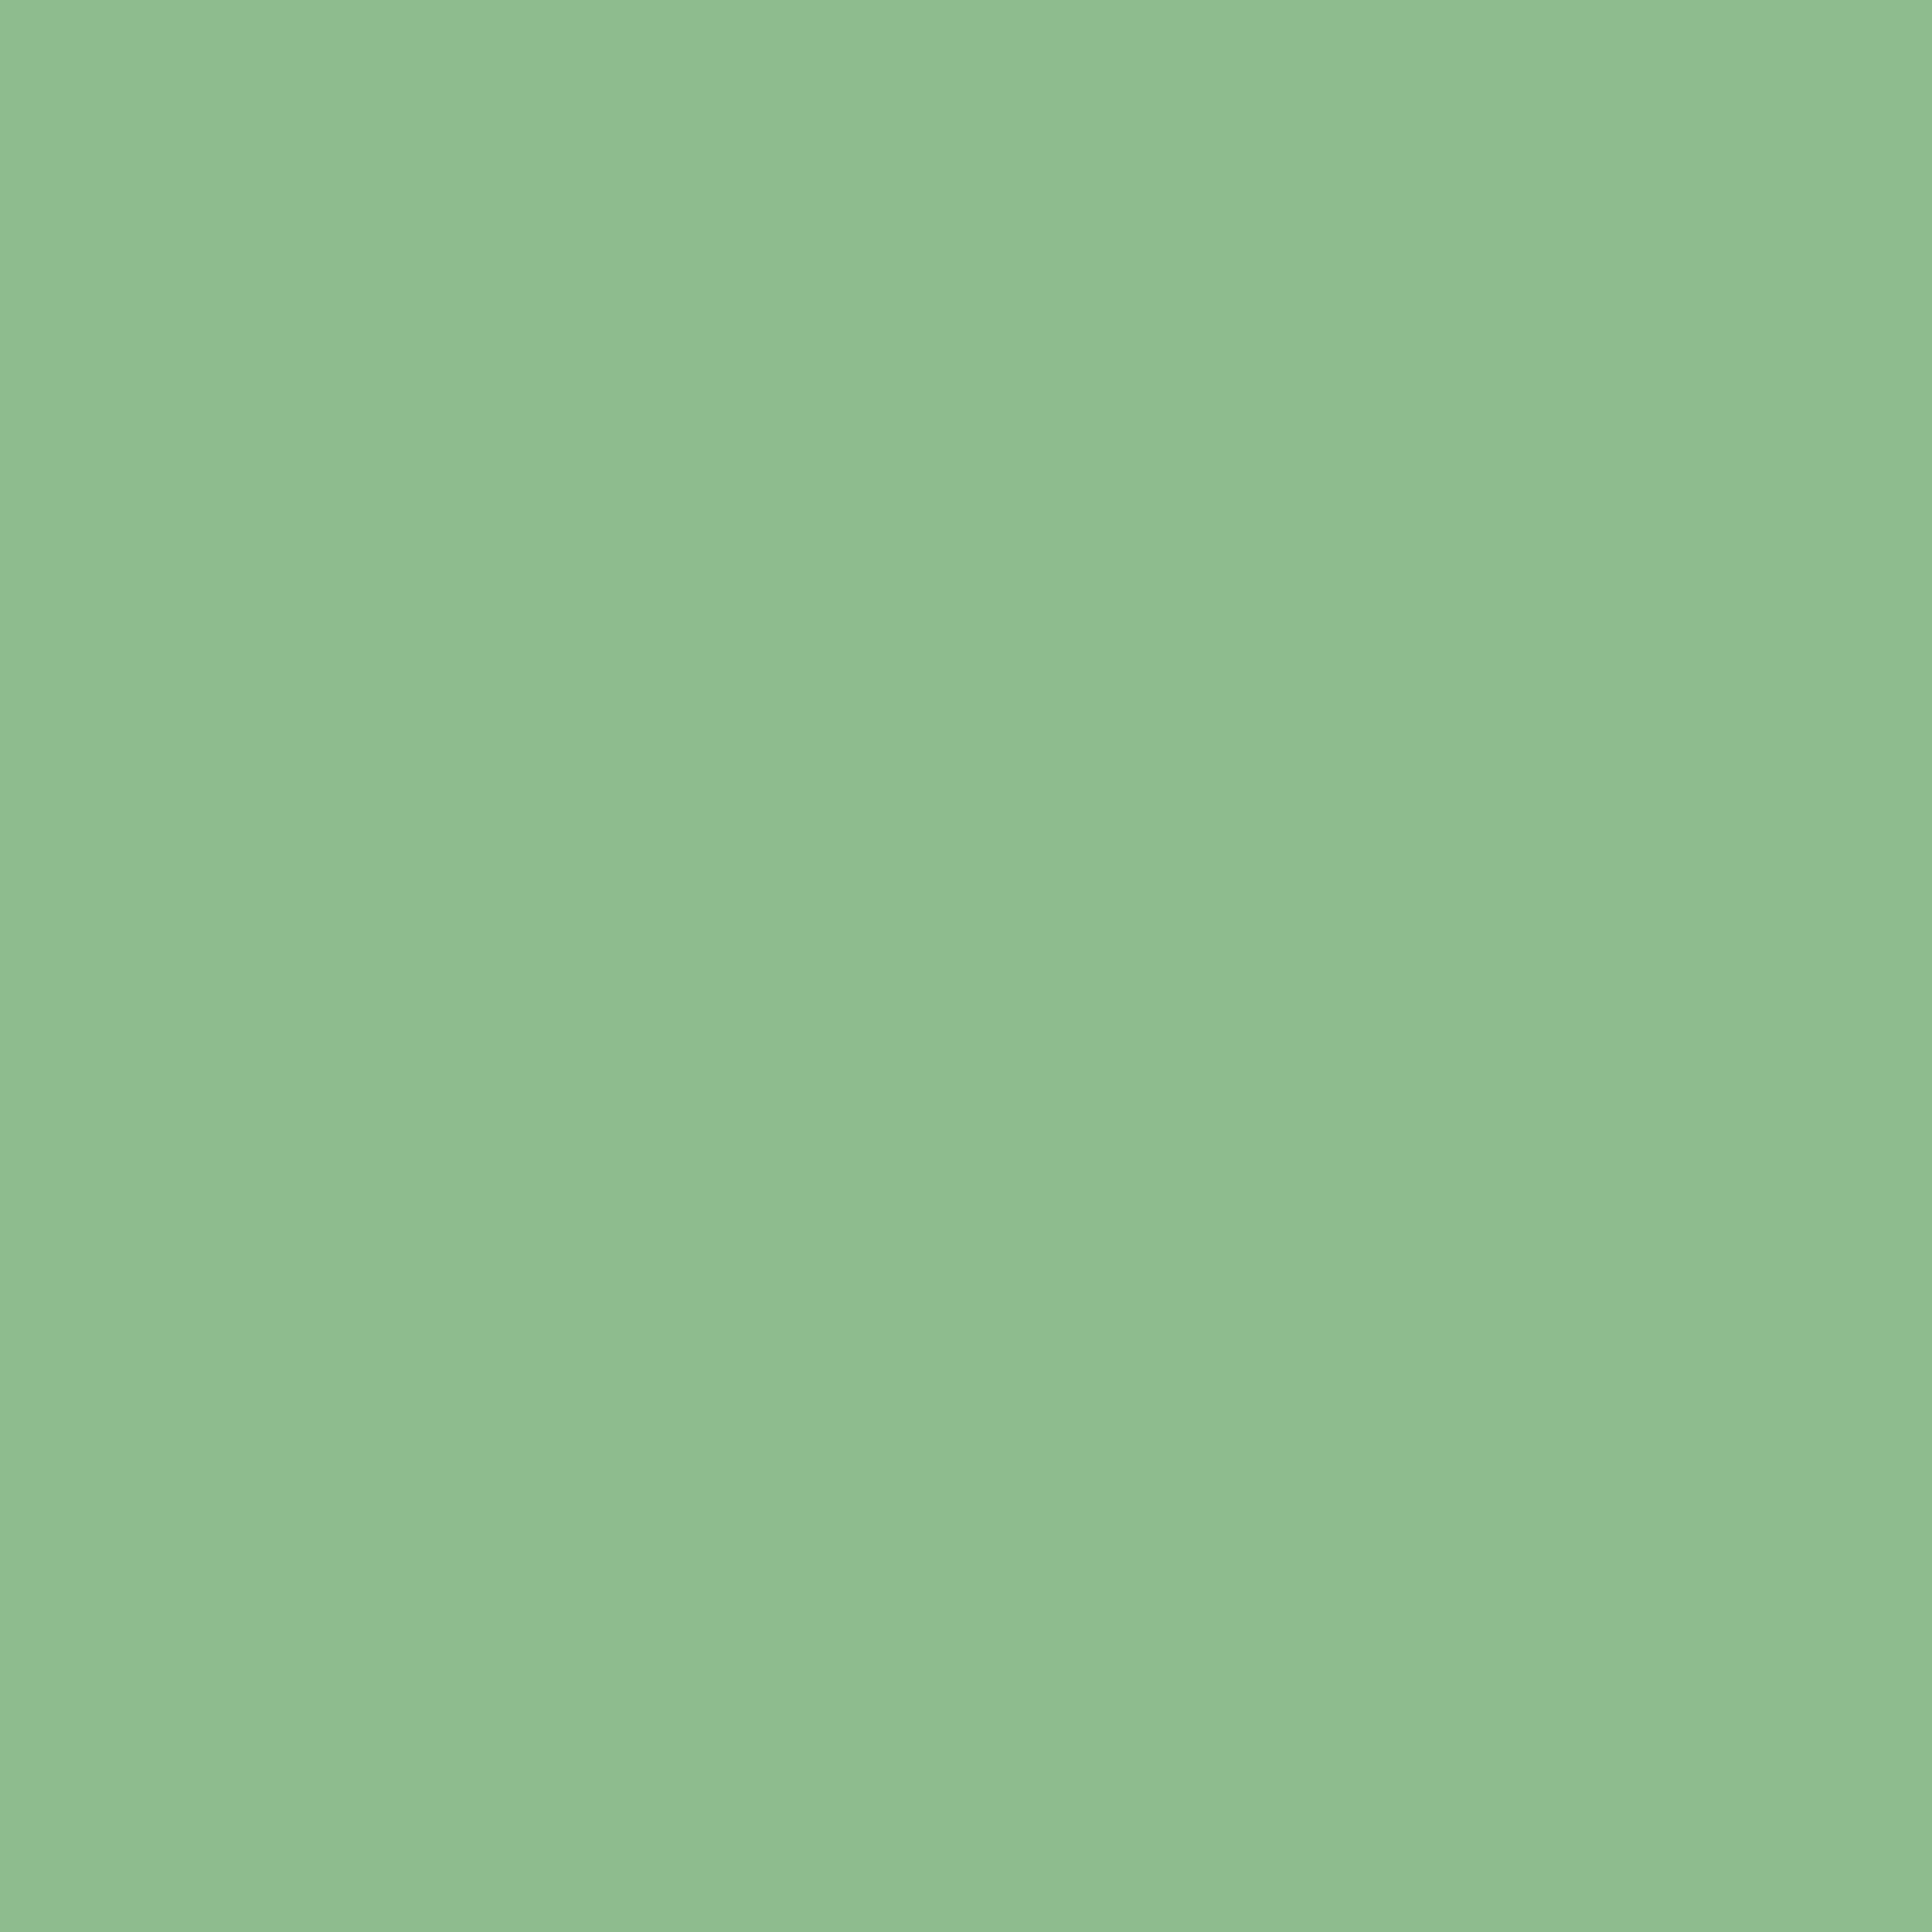 2732x2732 Dark Sea Green Solid Color Background